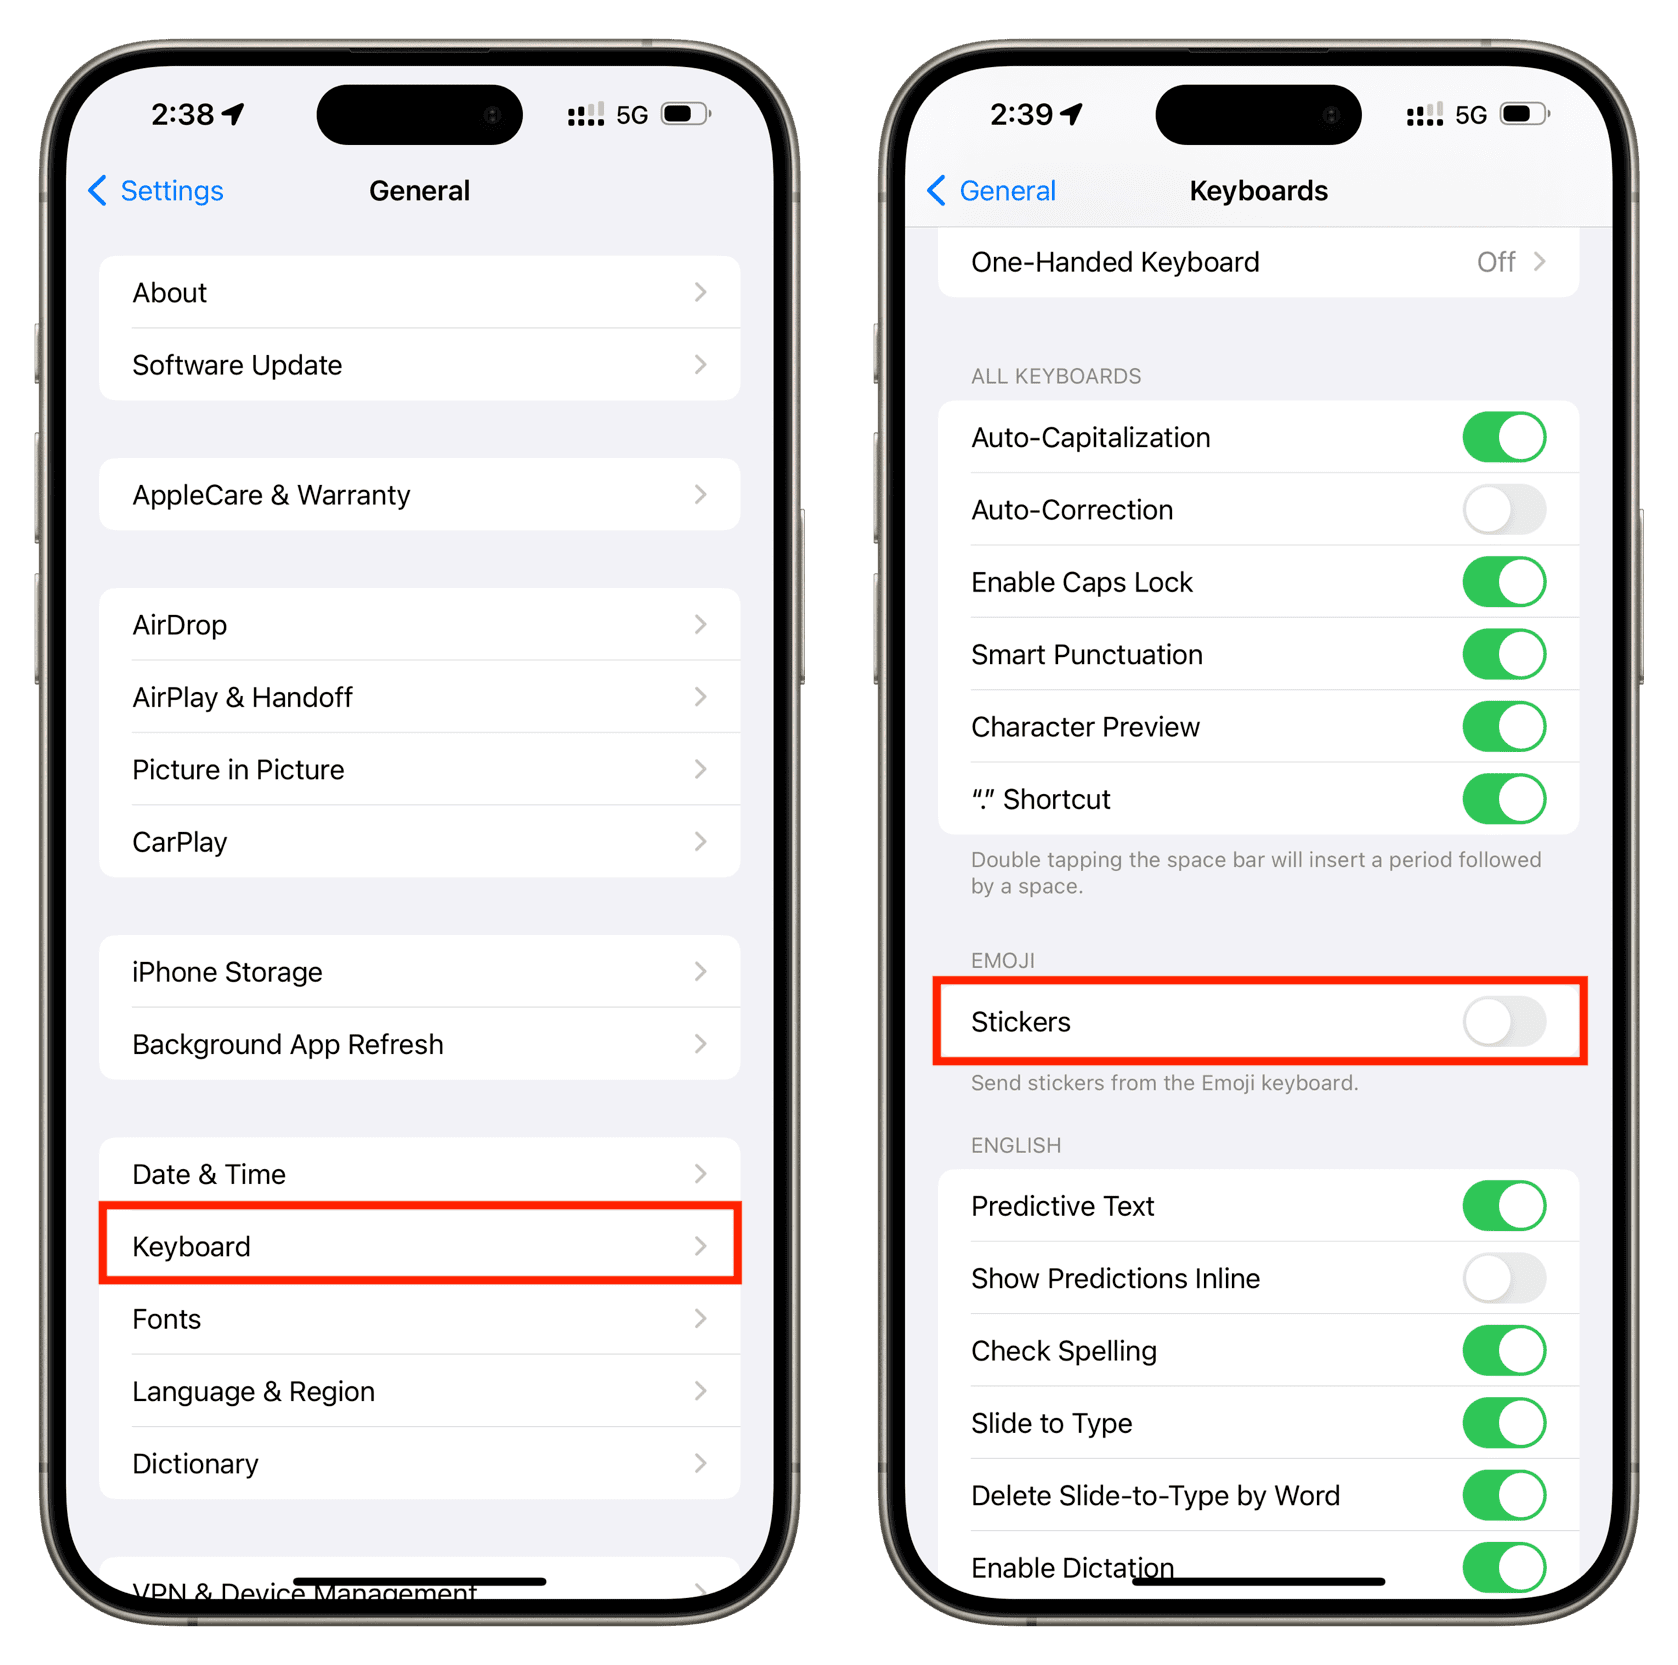 Turn off Stickers in iPhone Keyboard settings